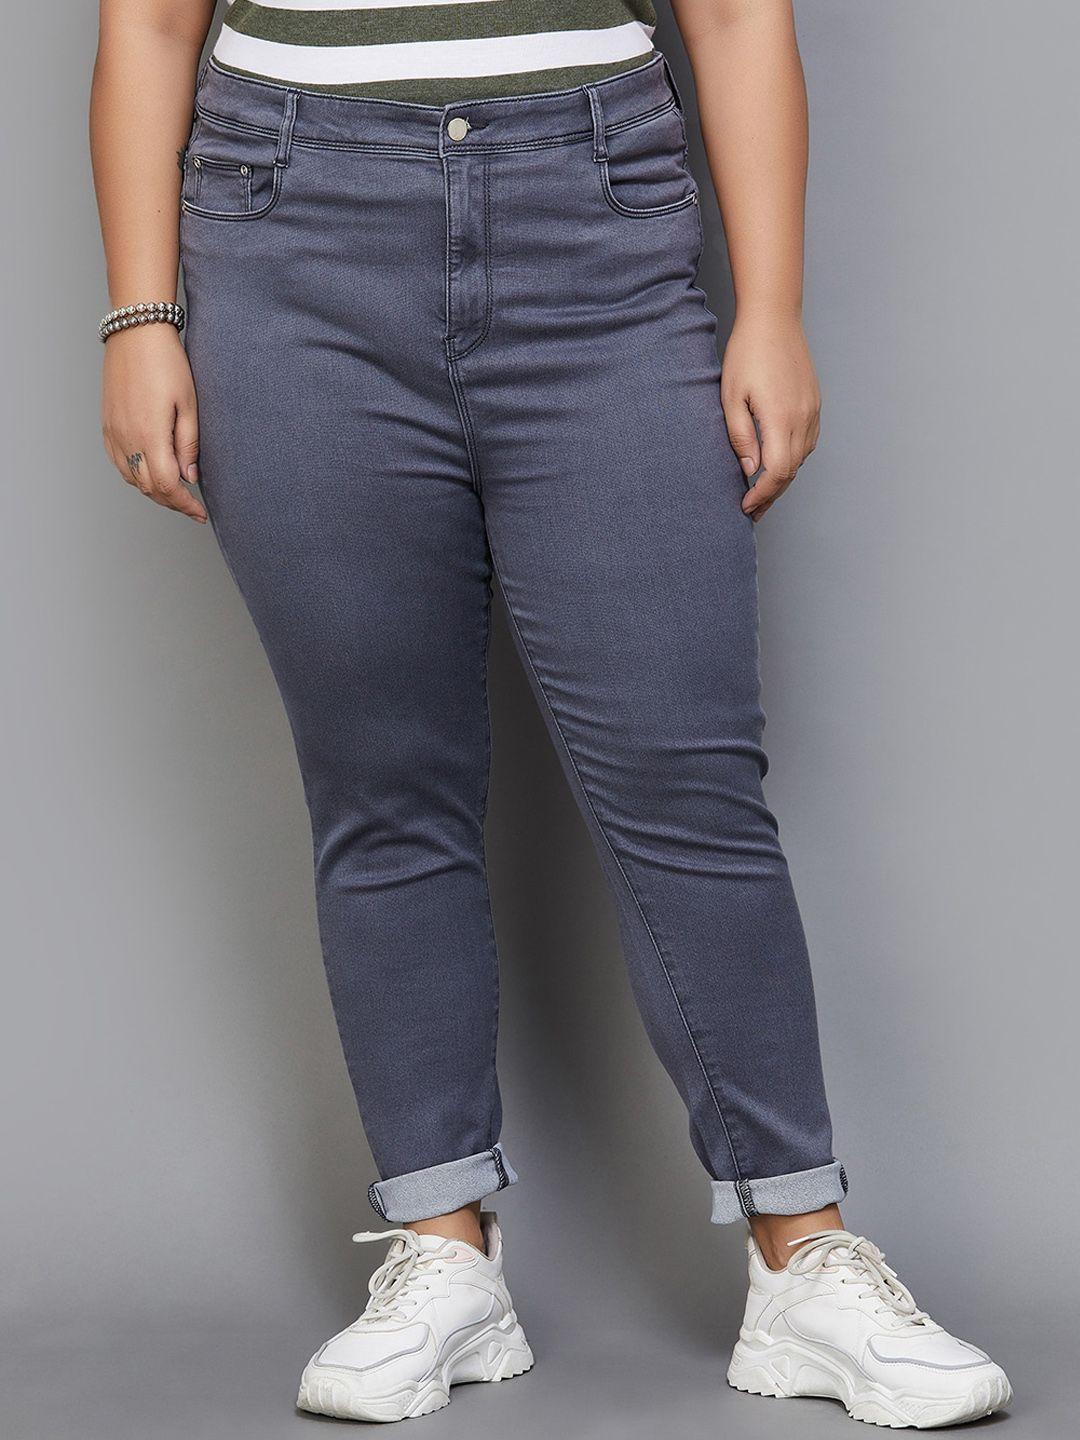 nexus by lifestyle women skinny fit jeans